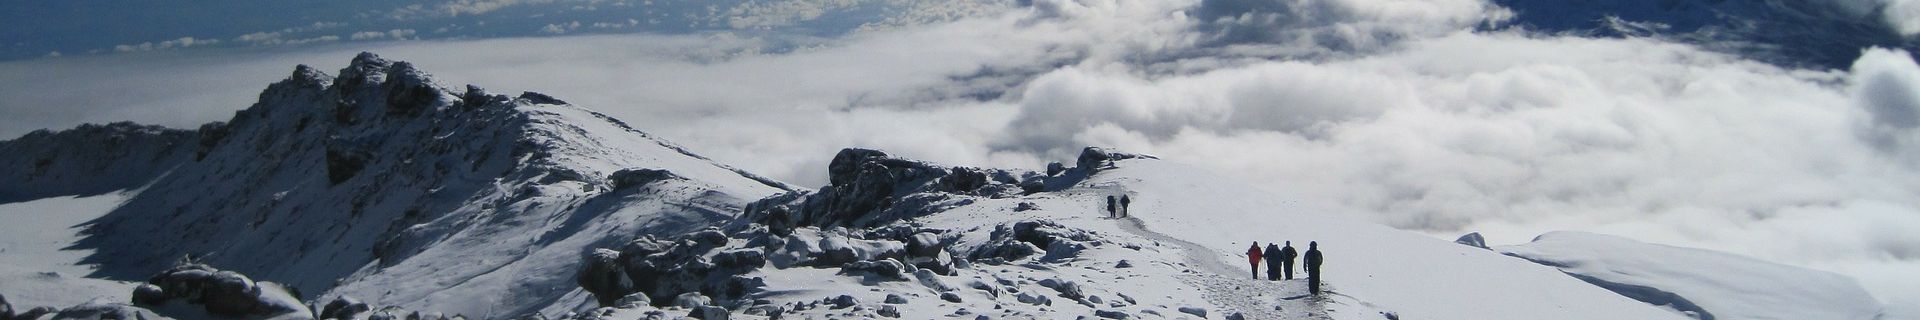 Kilimandscharo Tour alpine Zone